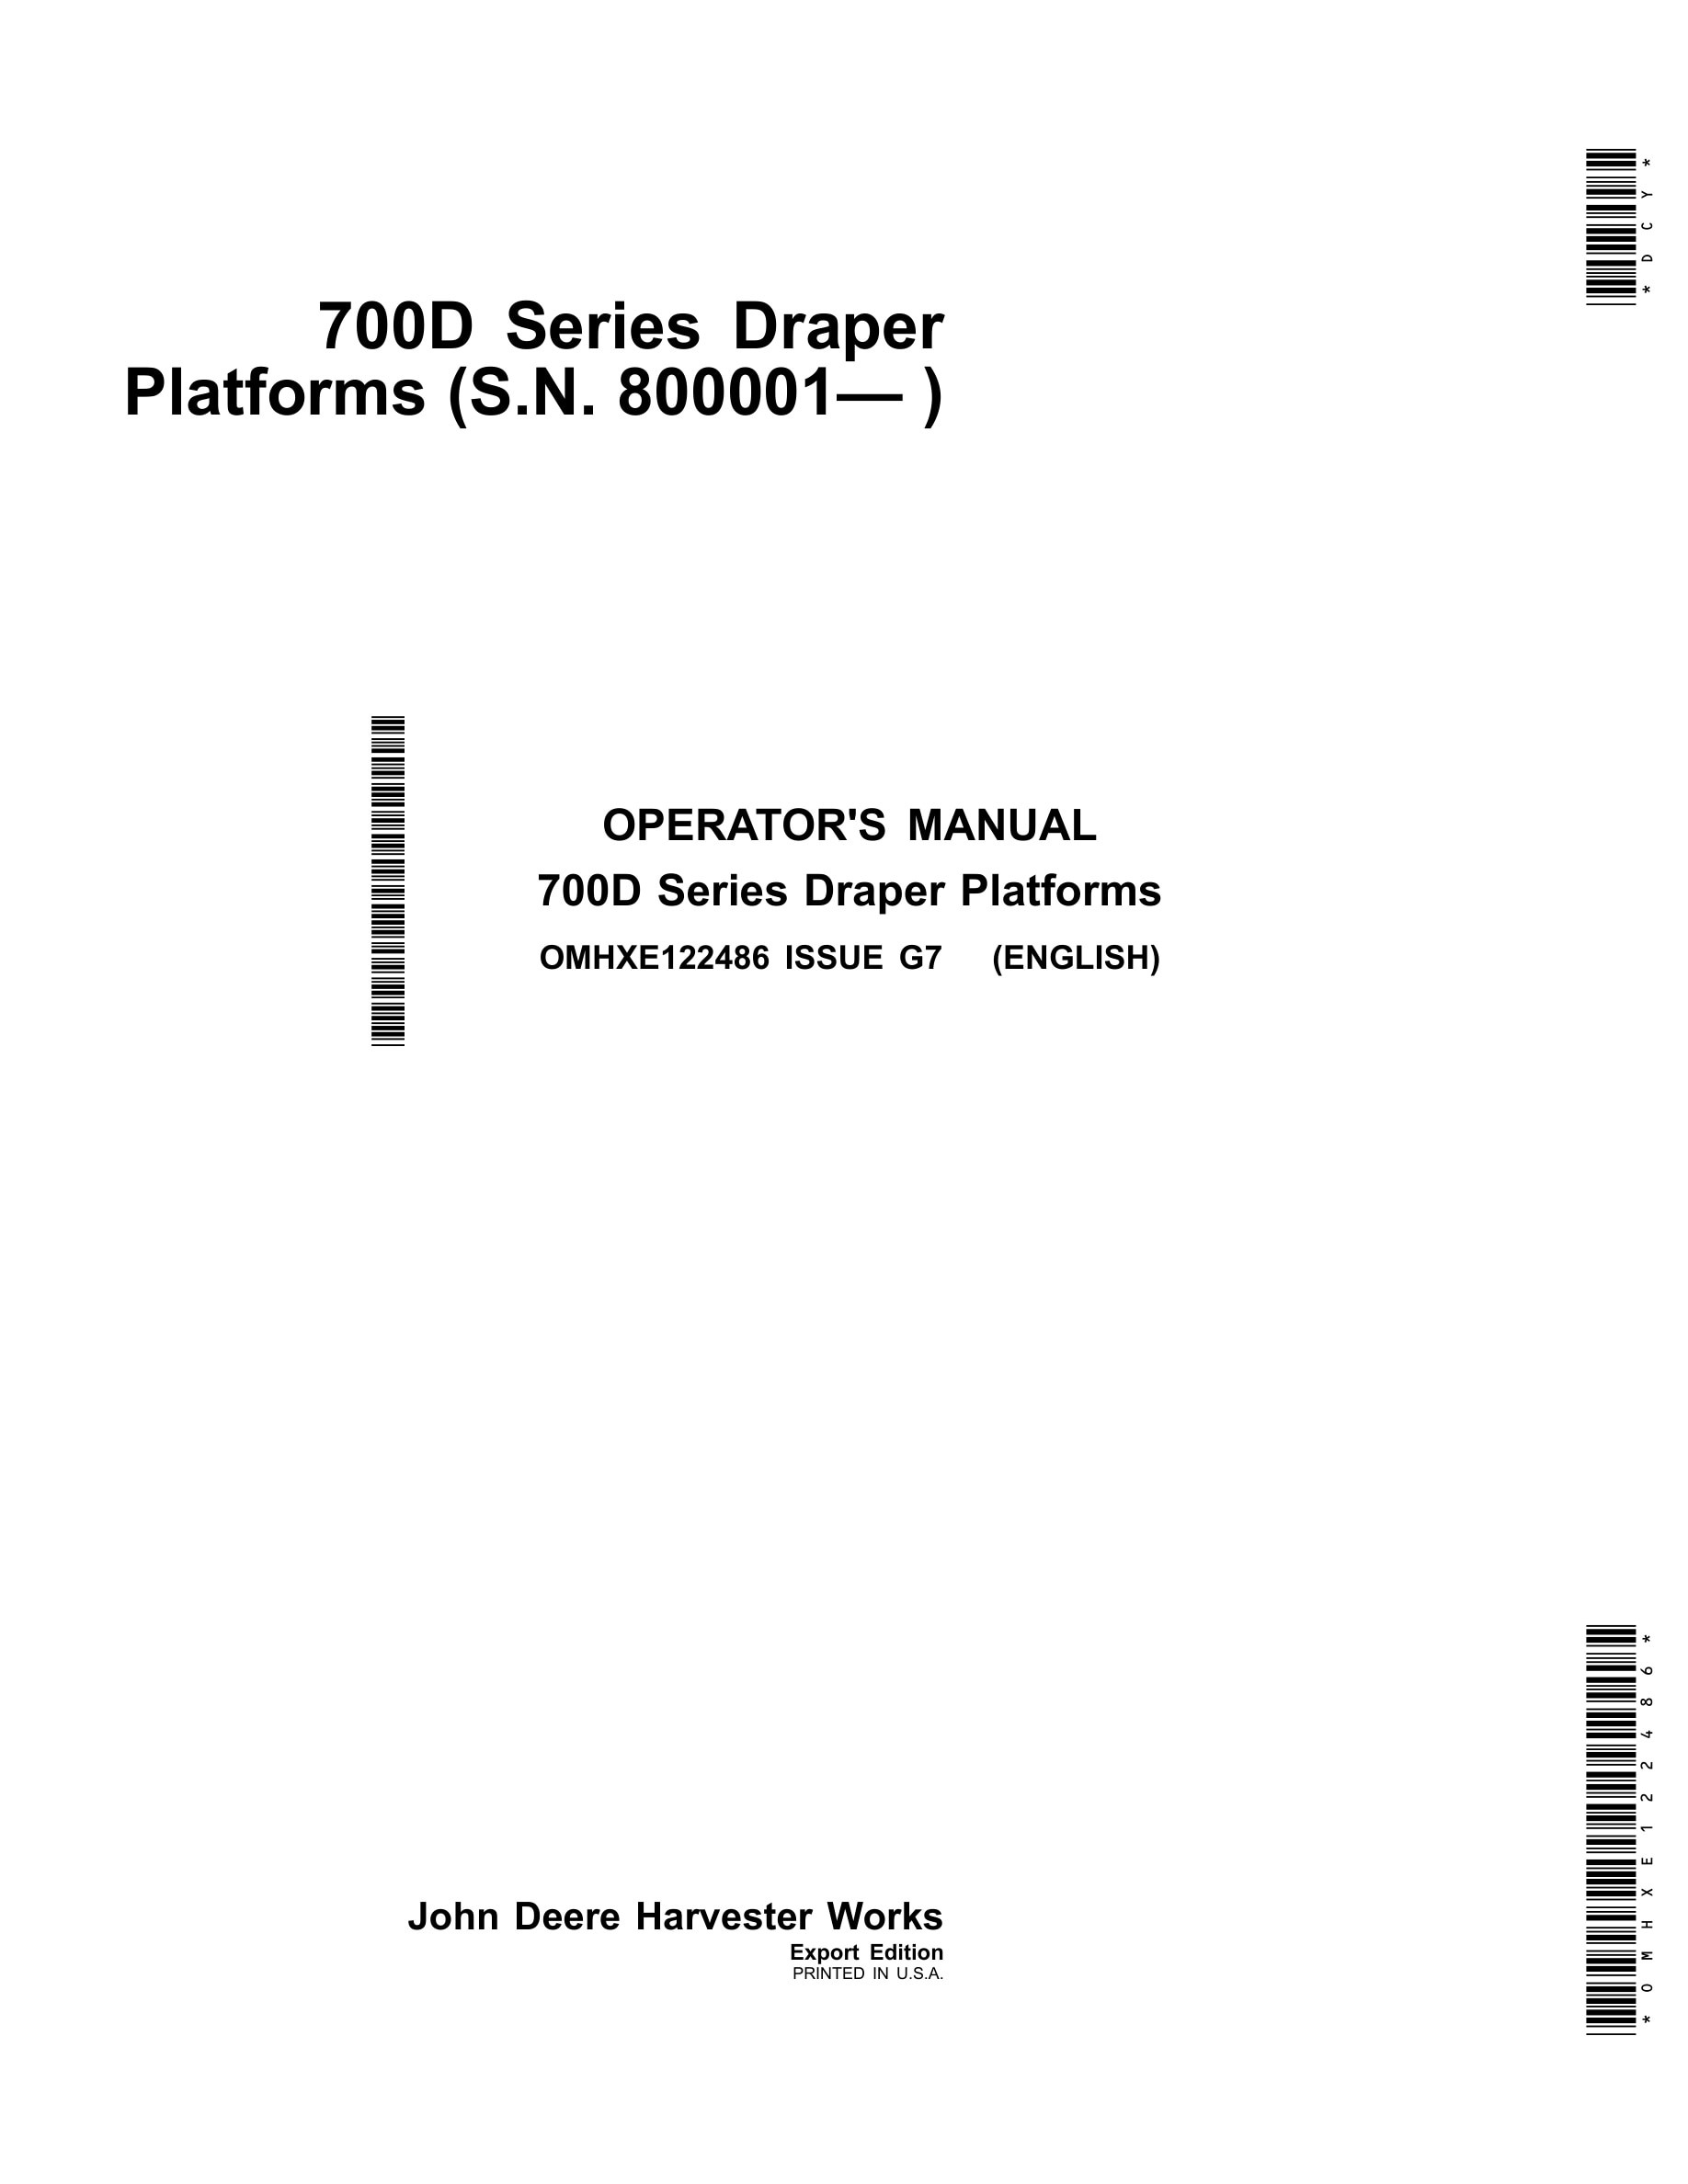 John Deere 700D Series Draper Platforms Operator Manual OMHXE122486-1